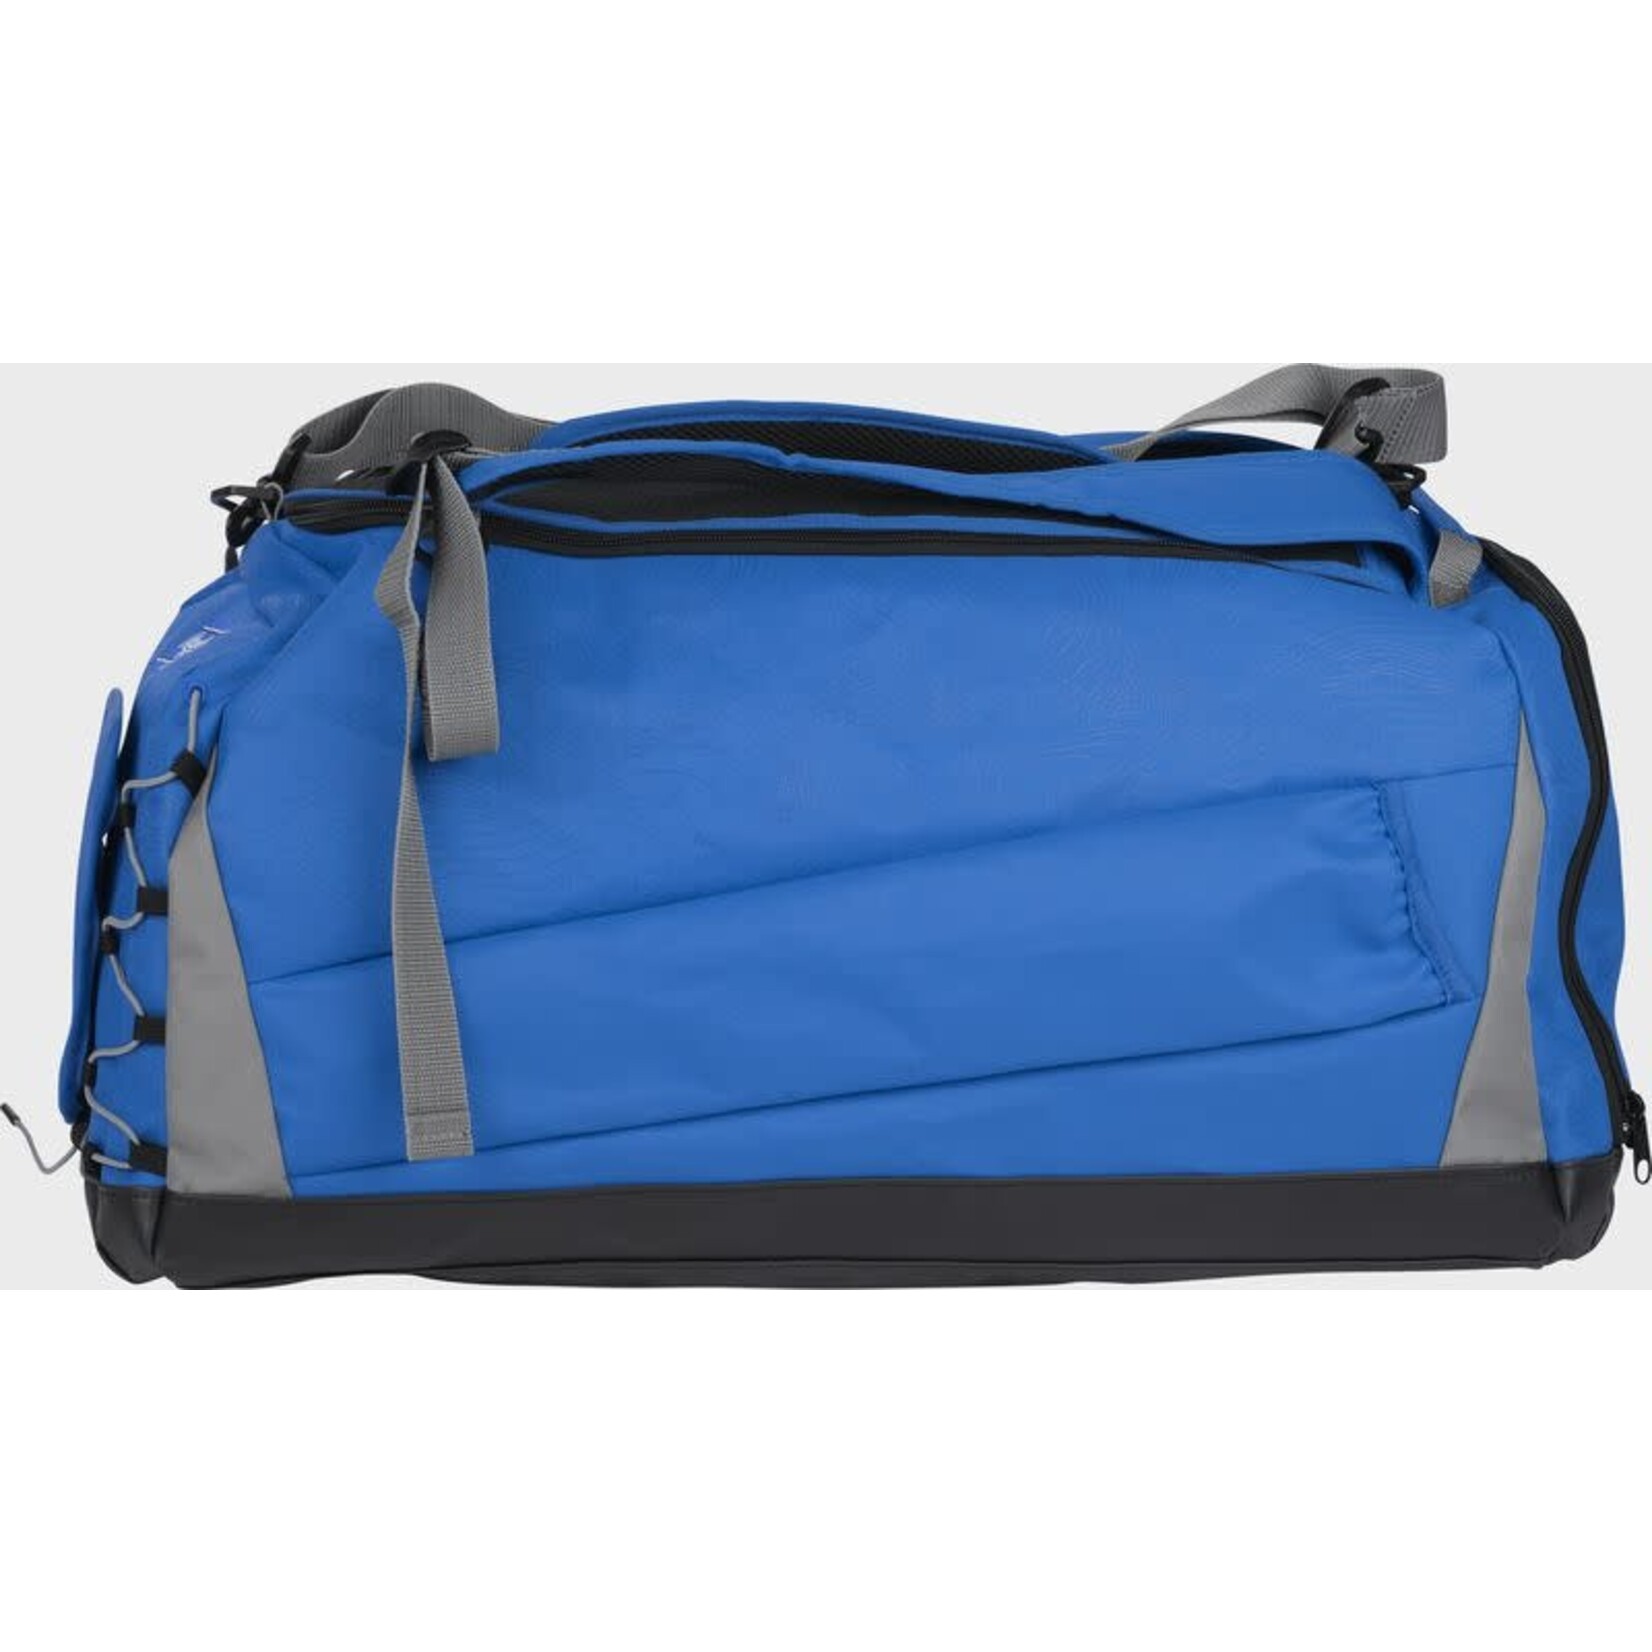 Rawlings Rawlings Mach Duffle  Backpack Bag